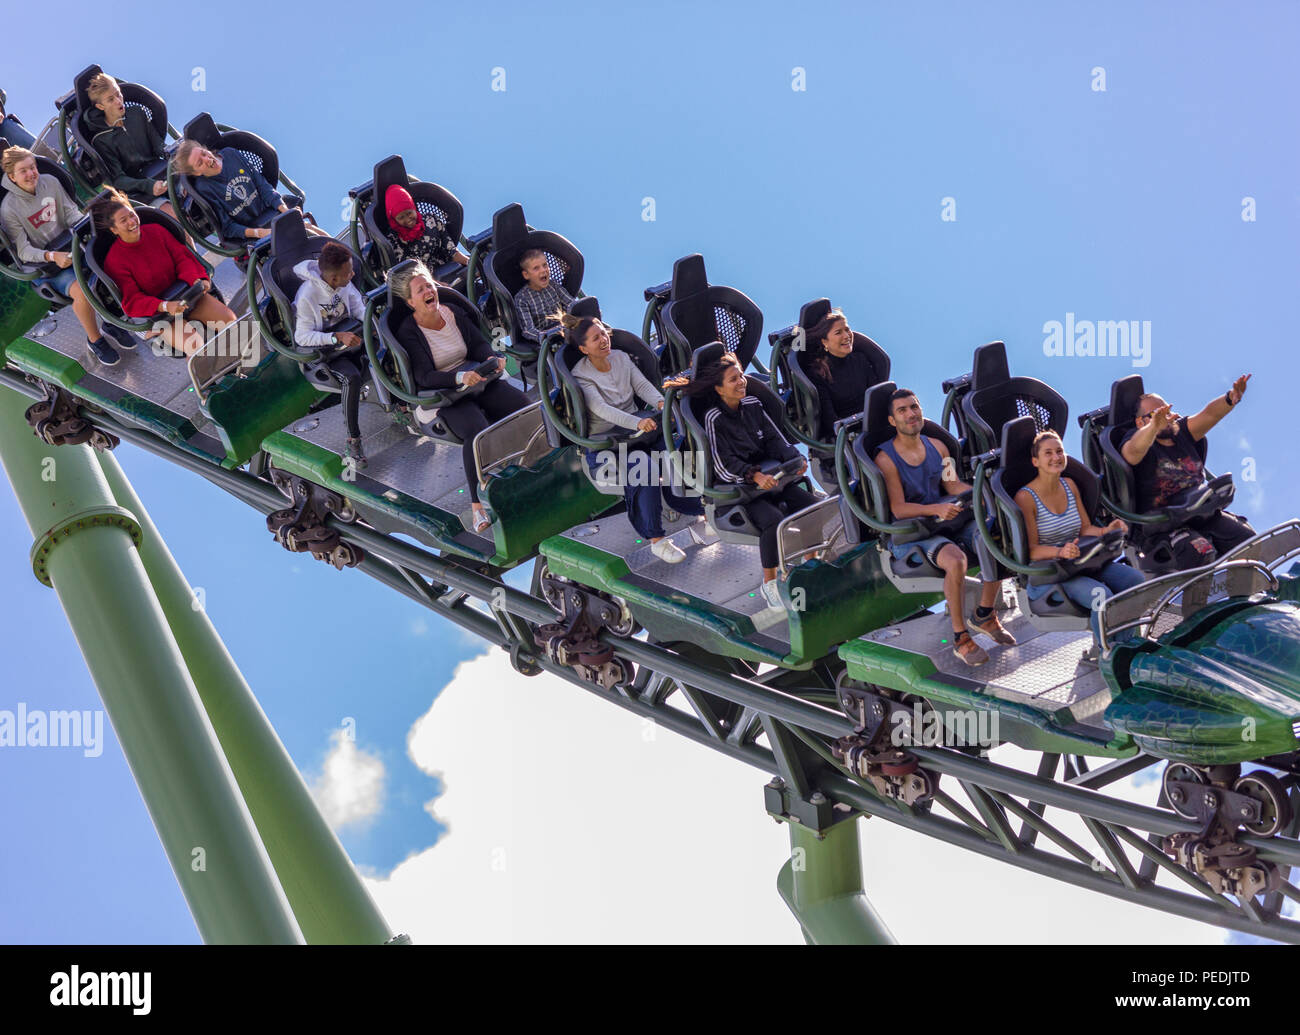 Helix roller coaster at Liseberg set against blue sky Stock Photo - Alamy